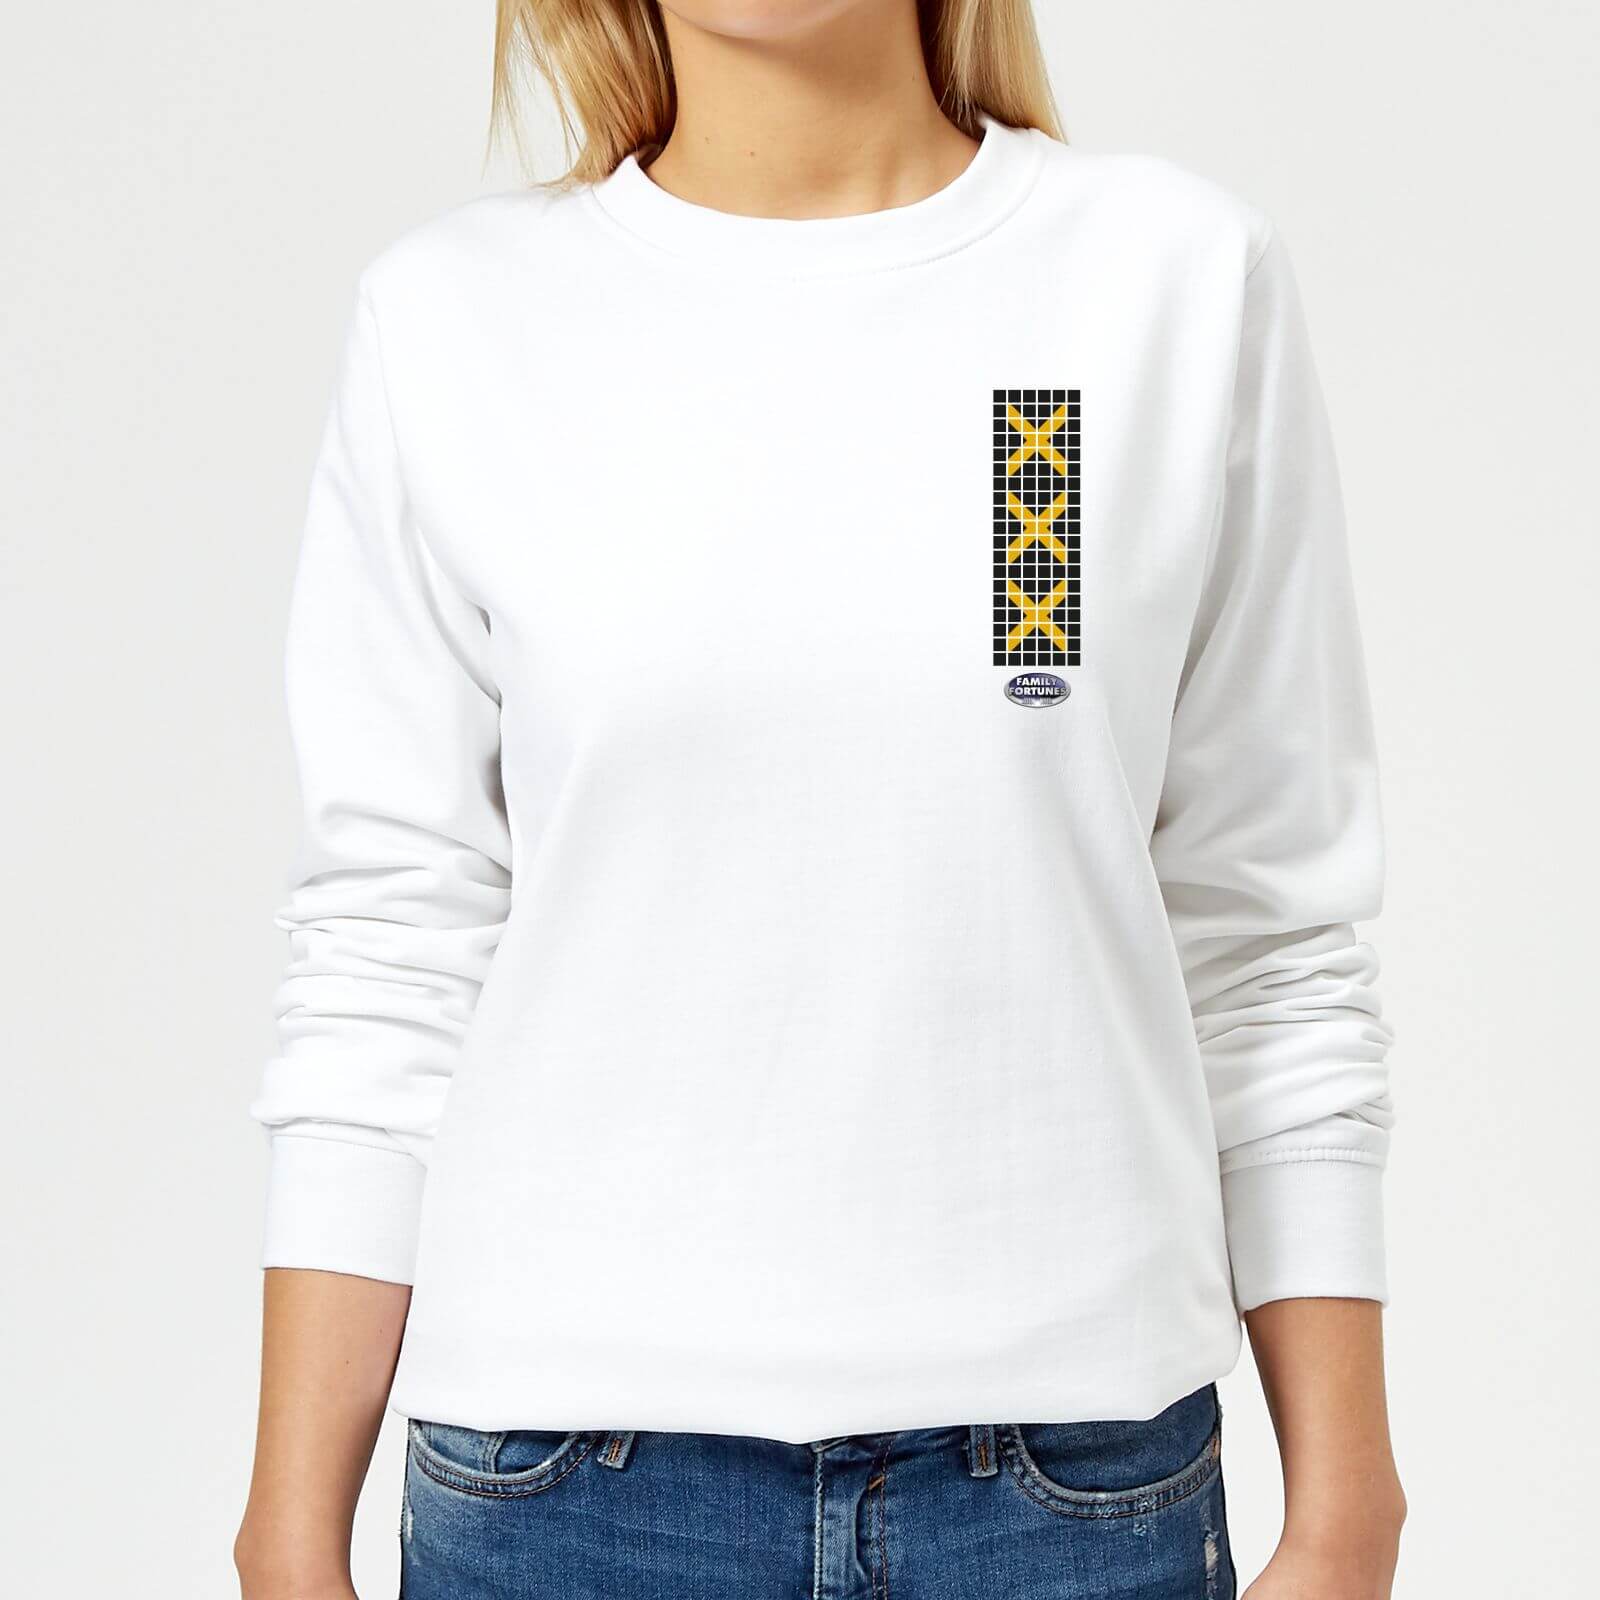 Family Fortunes Eh-Urrghh! Women's Sweatshirt - White - XS - White